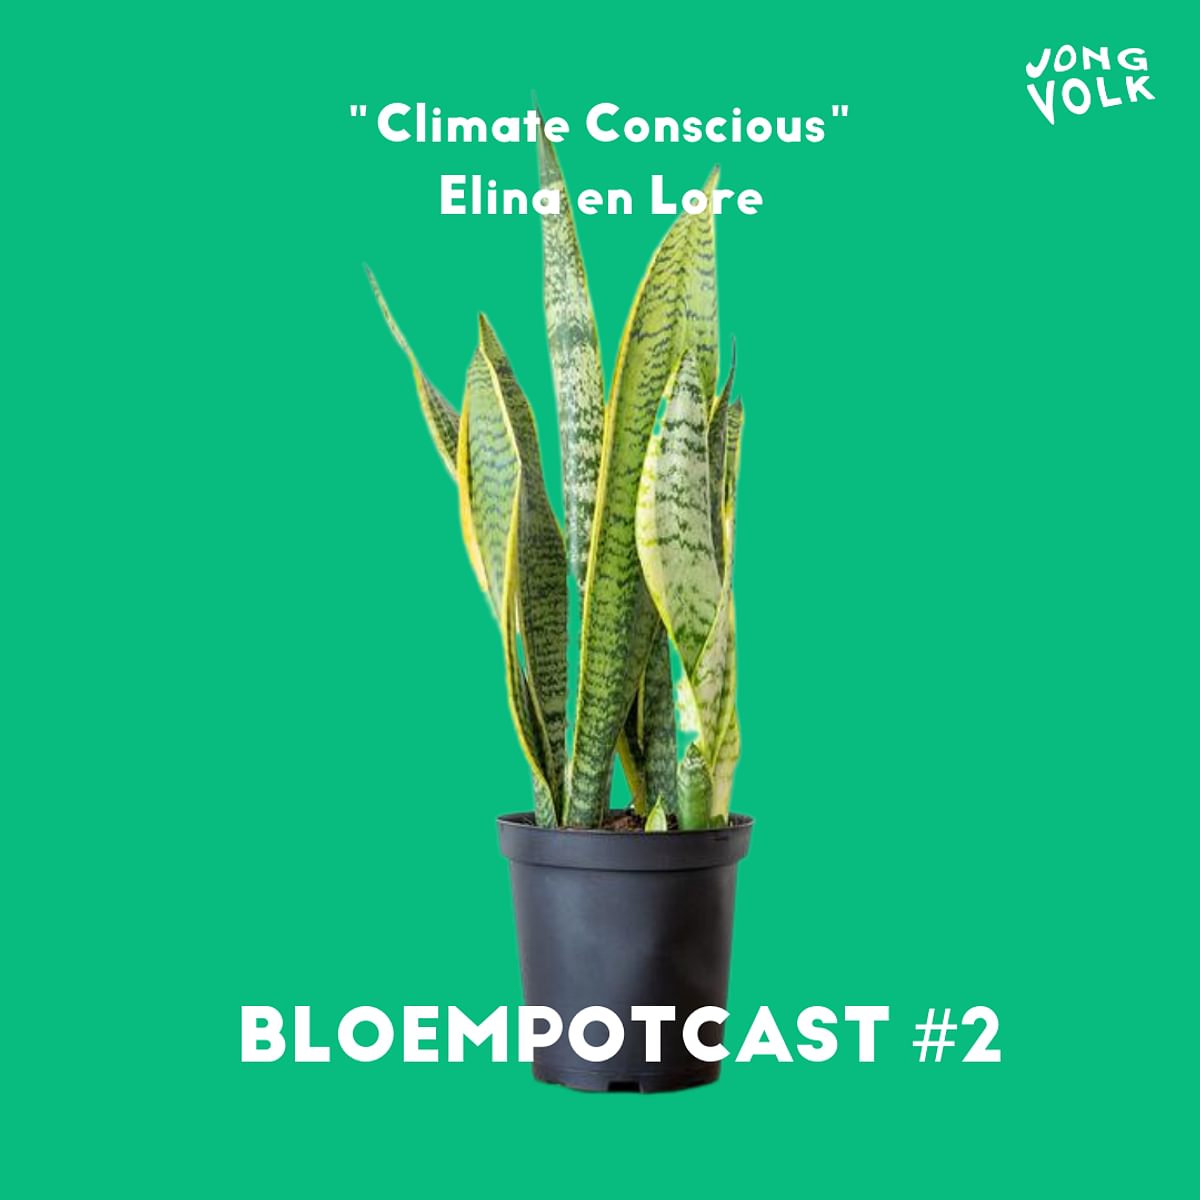 BLOEMPOTCAST #2 ELINA EN LORE VAN CLIMATE CONSCIOUS